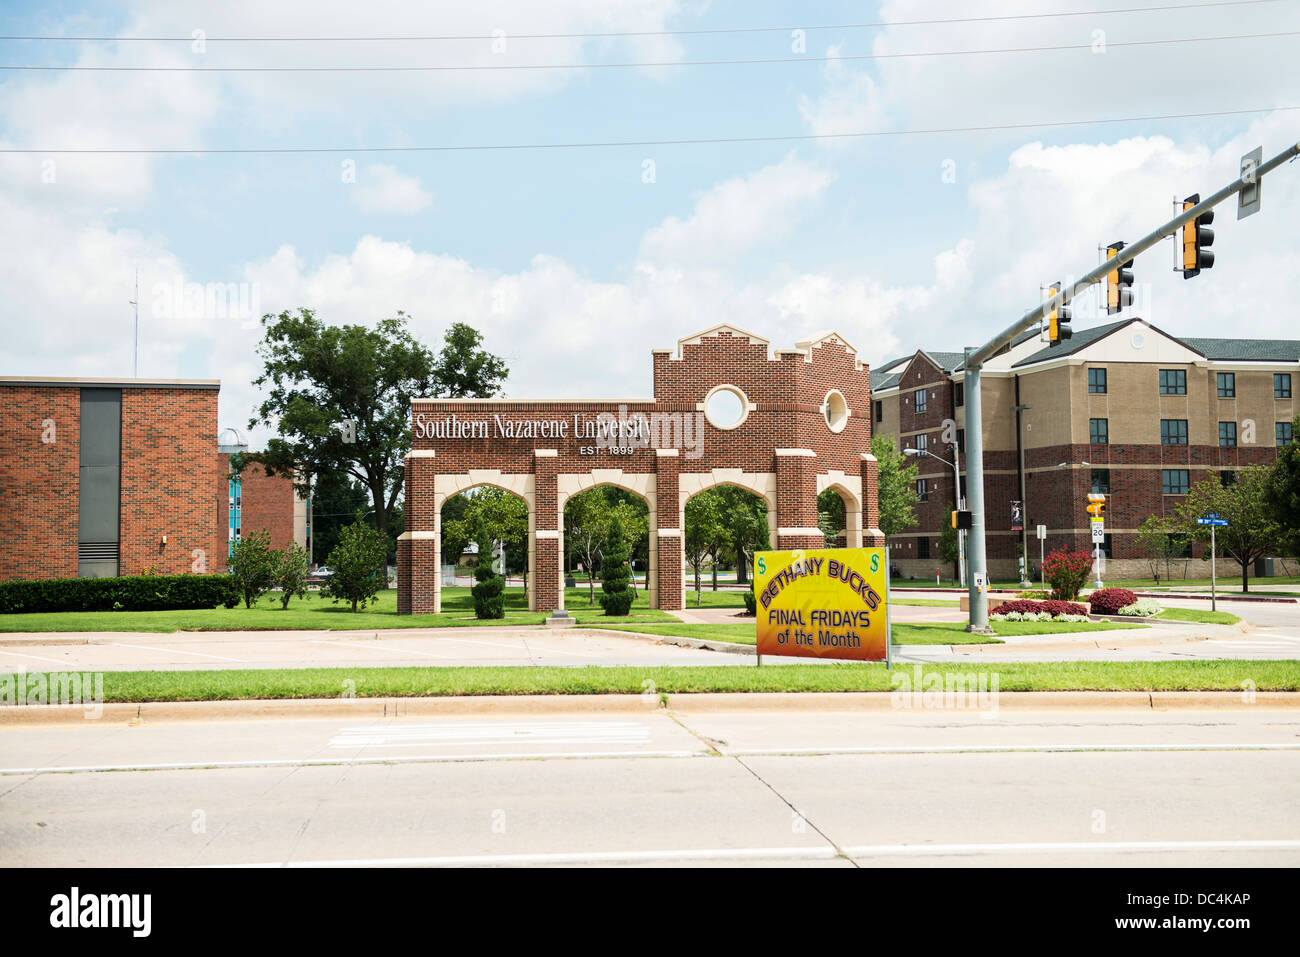 Southern Nazarene University located in downtown Bethany, Oklahoma, a neighboring town of Oklahoma City, Oklahoma, USA. Stock Photo